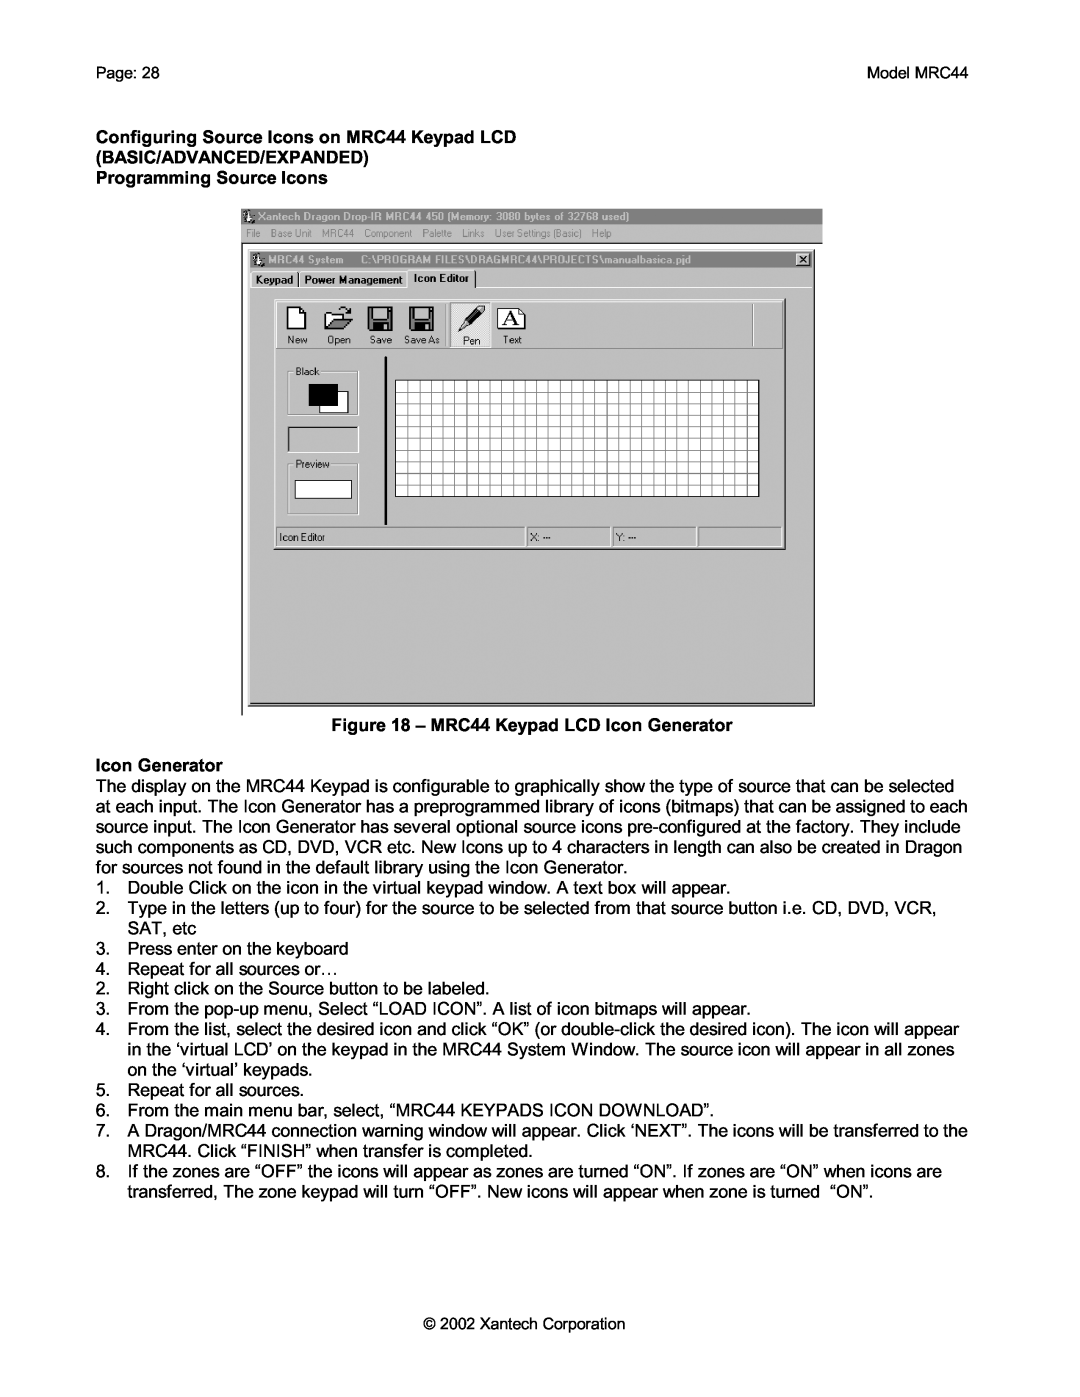 Xantech installation instructions Programming Source Icons, MRC44 Keypad LCD Icon Generator 